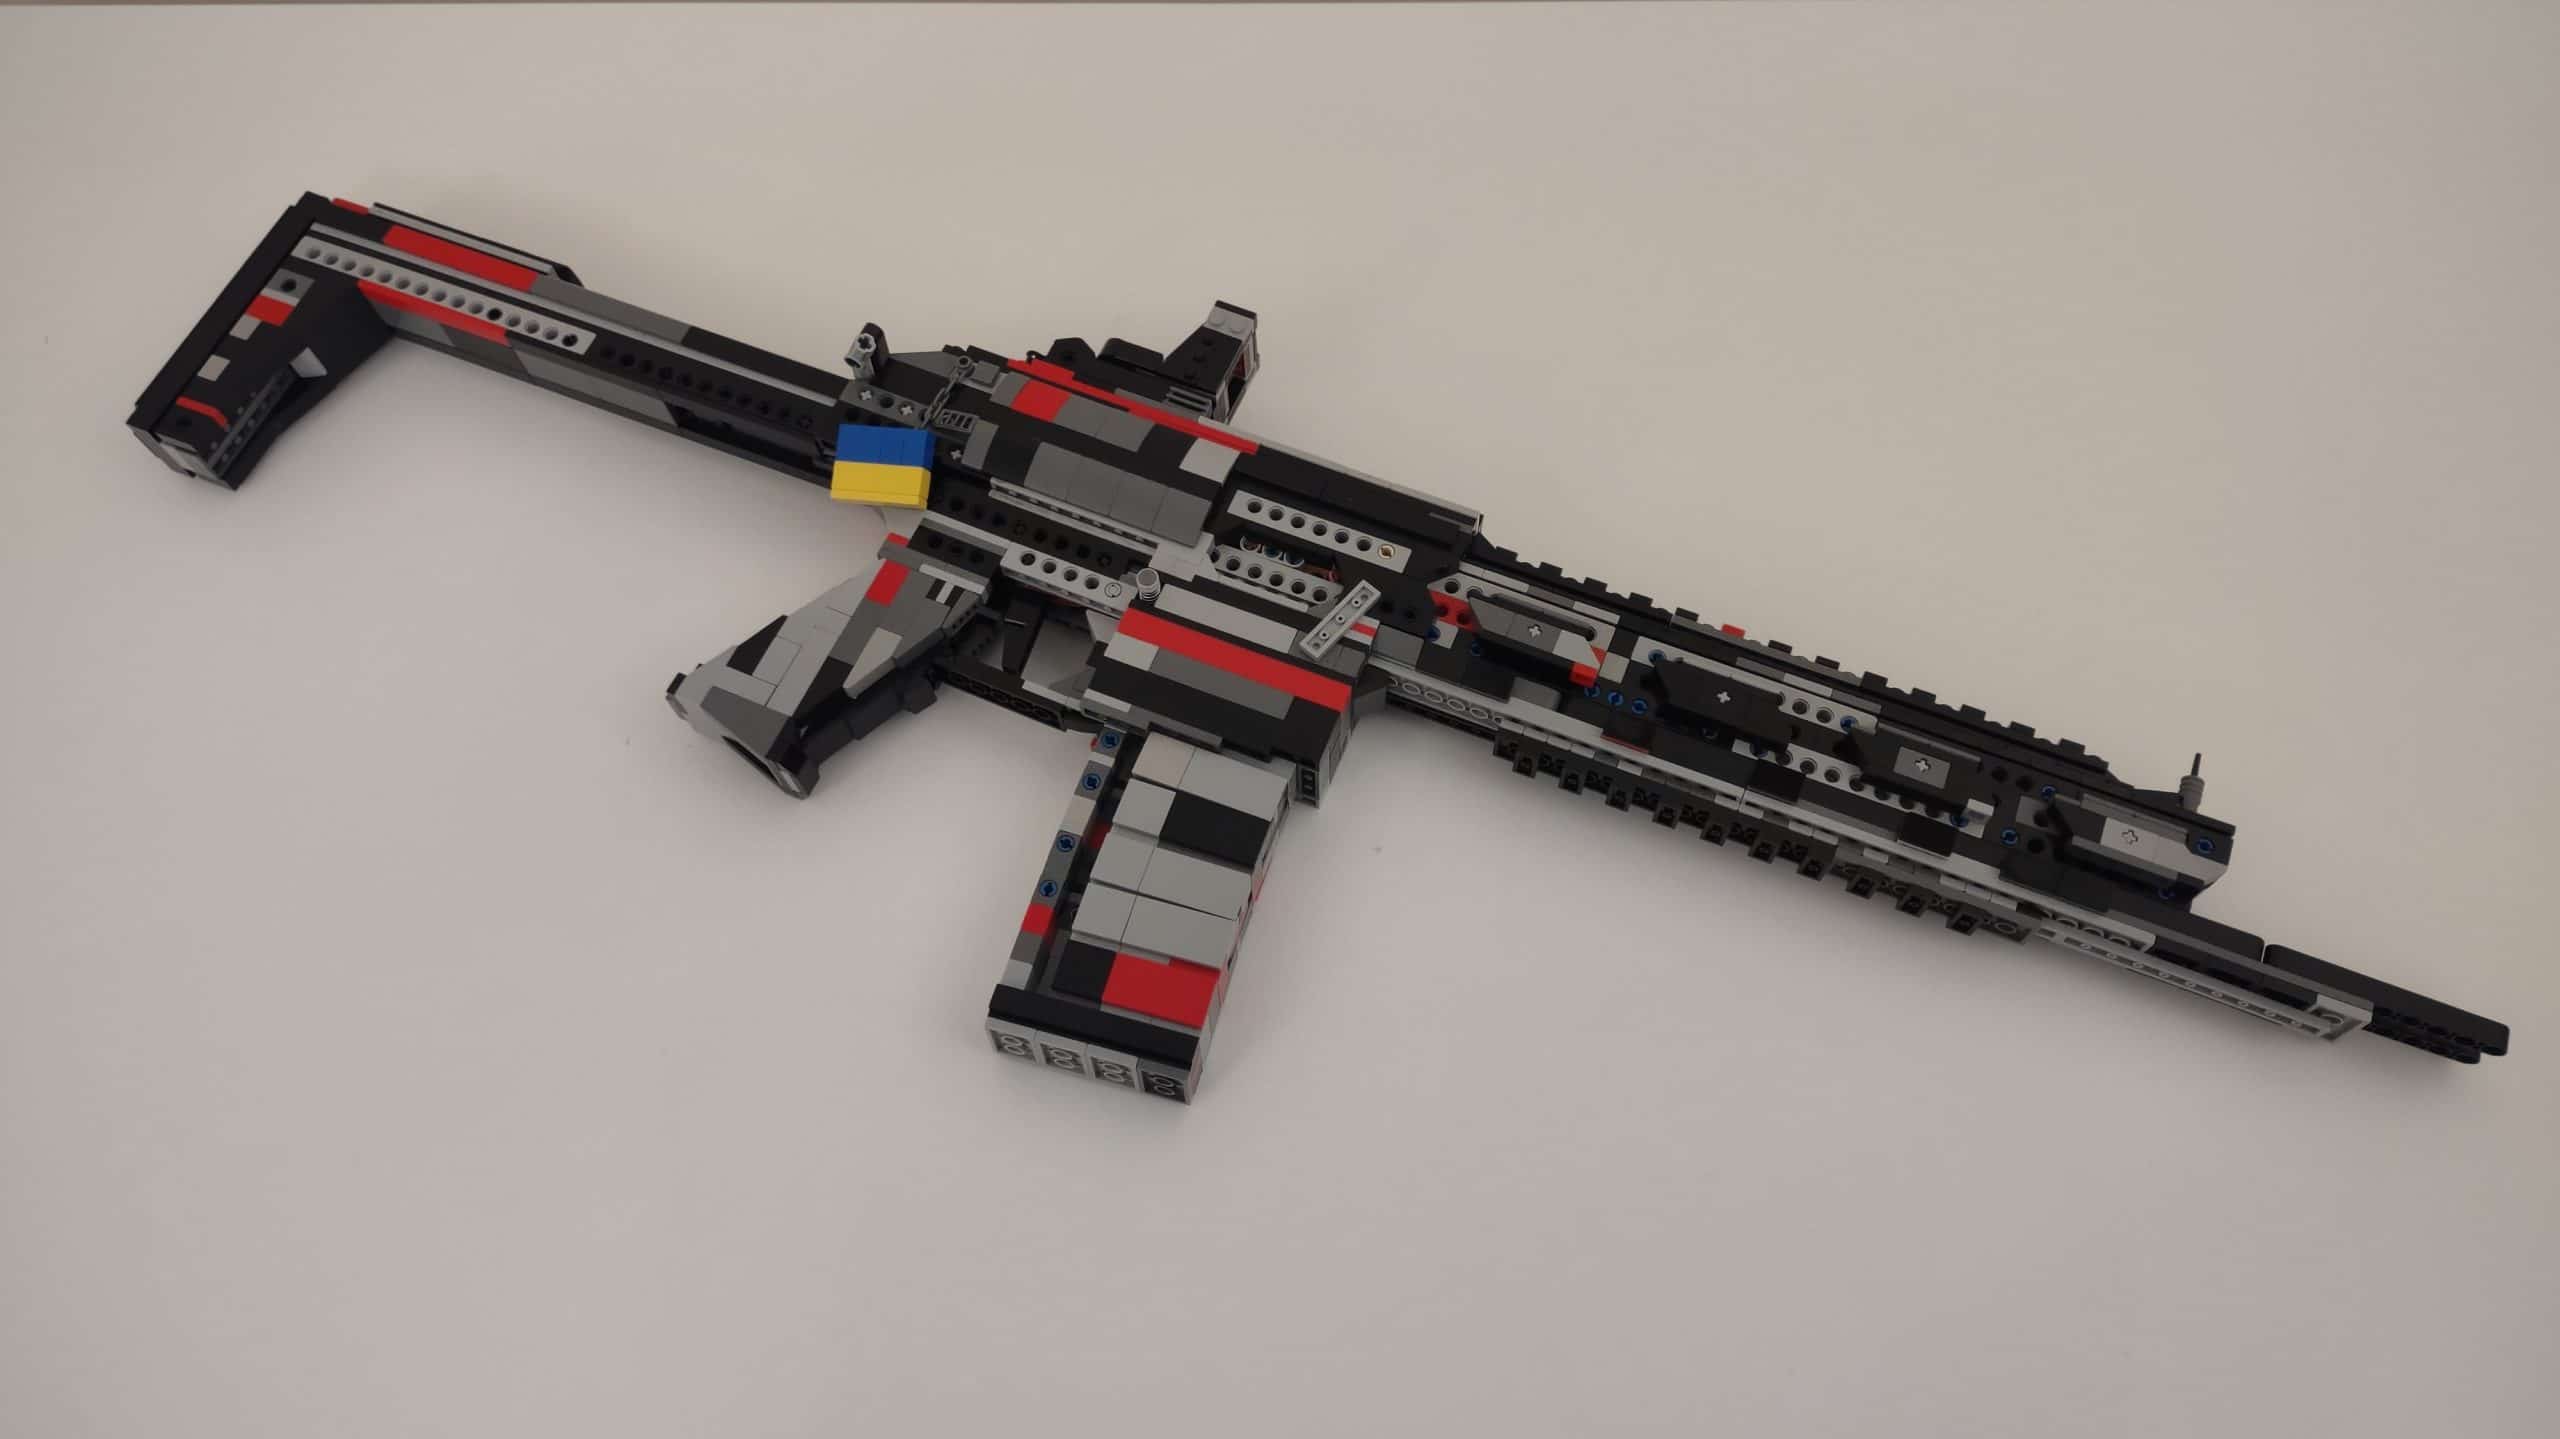 LEGO SSR15 Assault Rifle Instructions